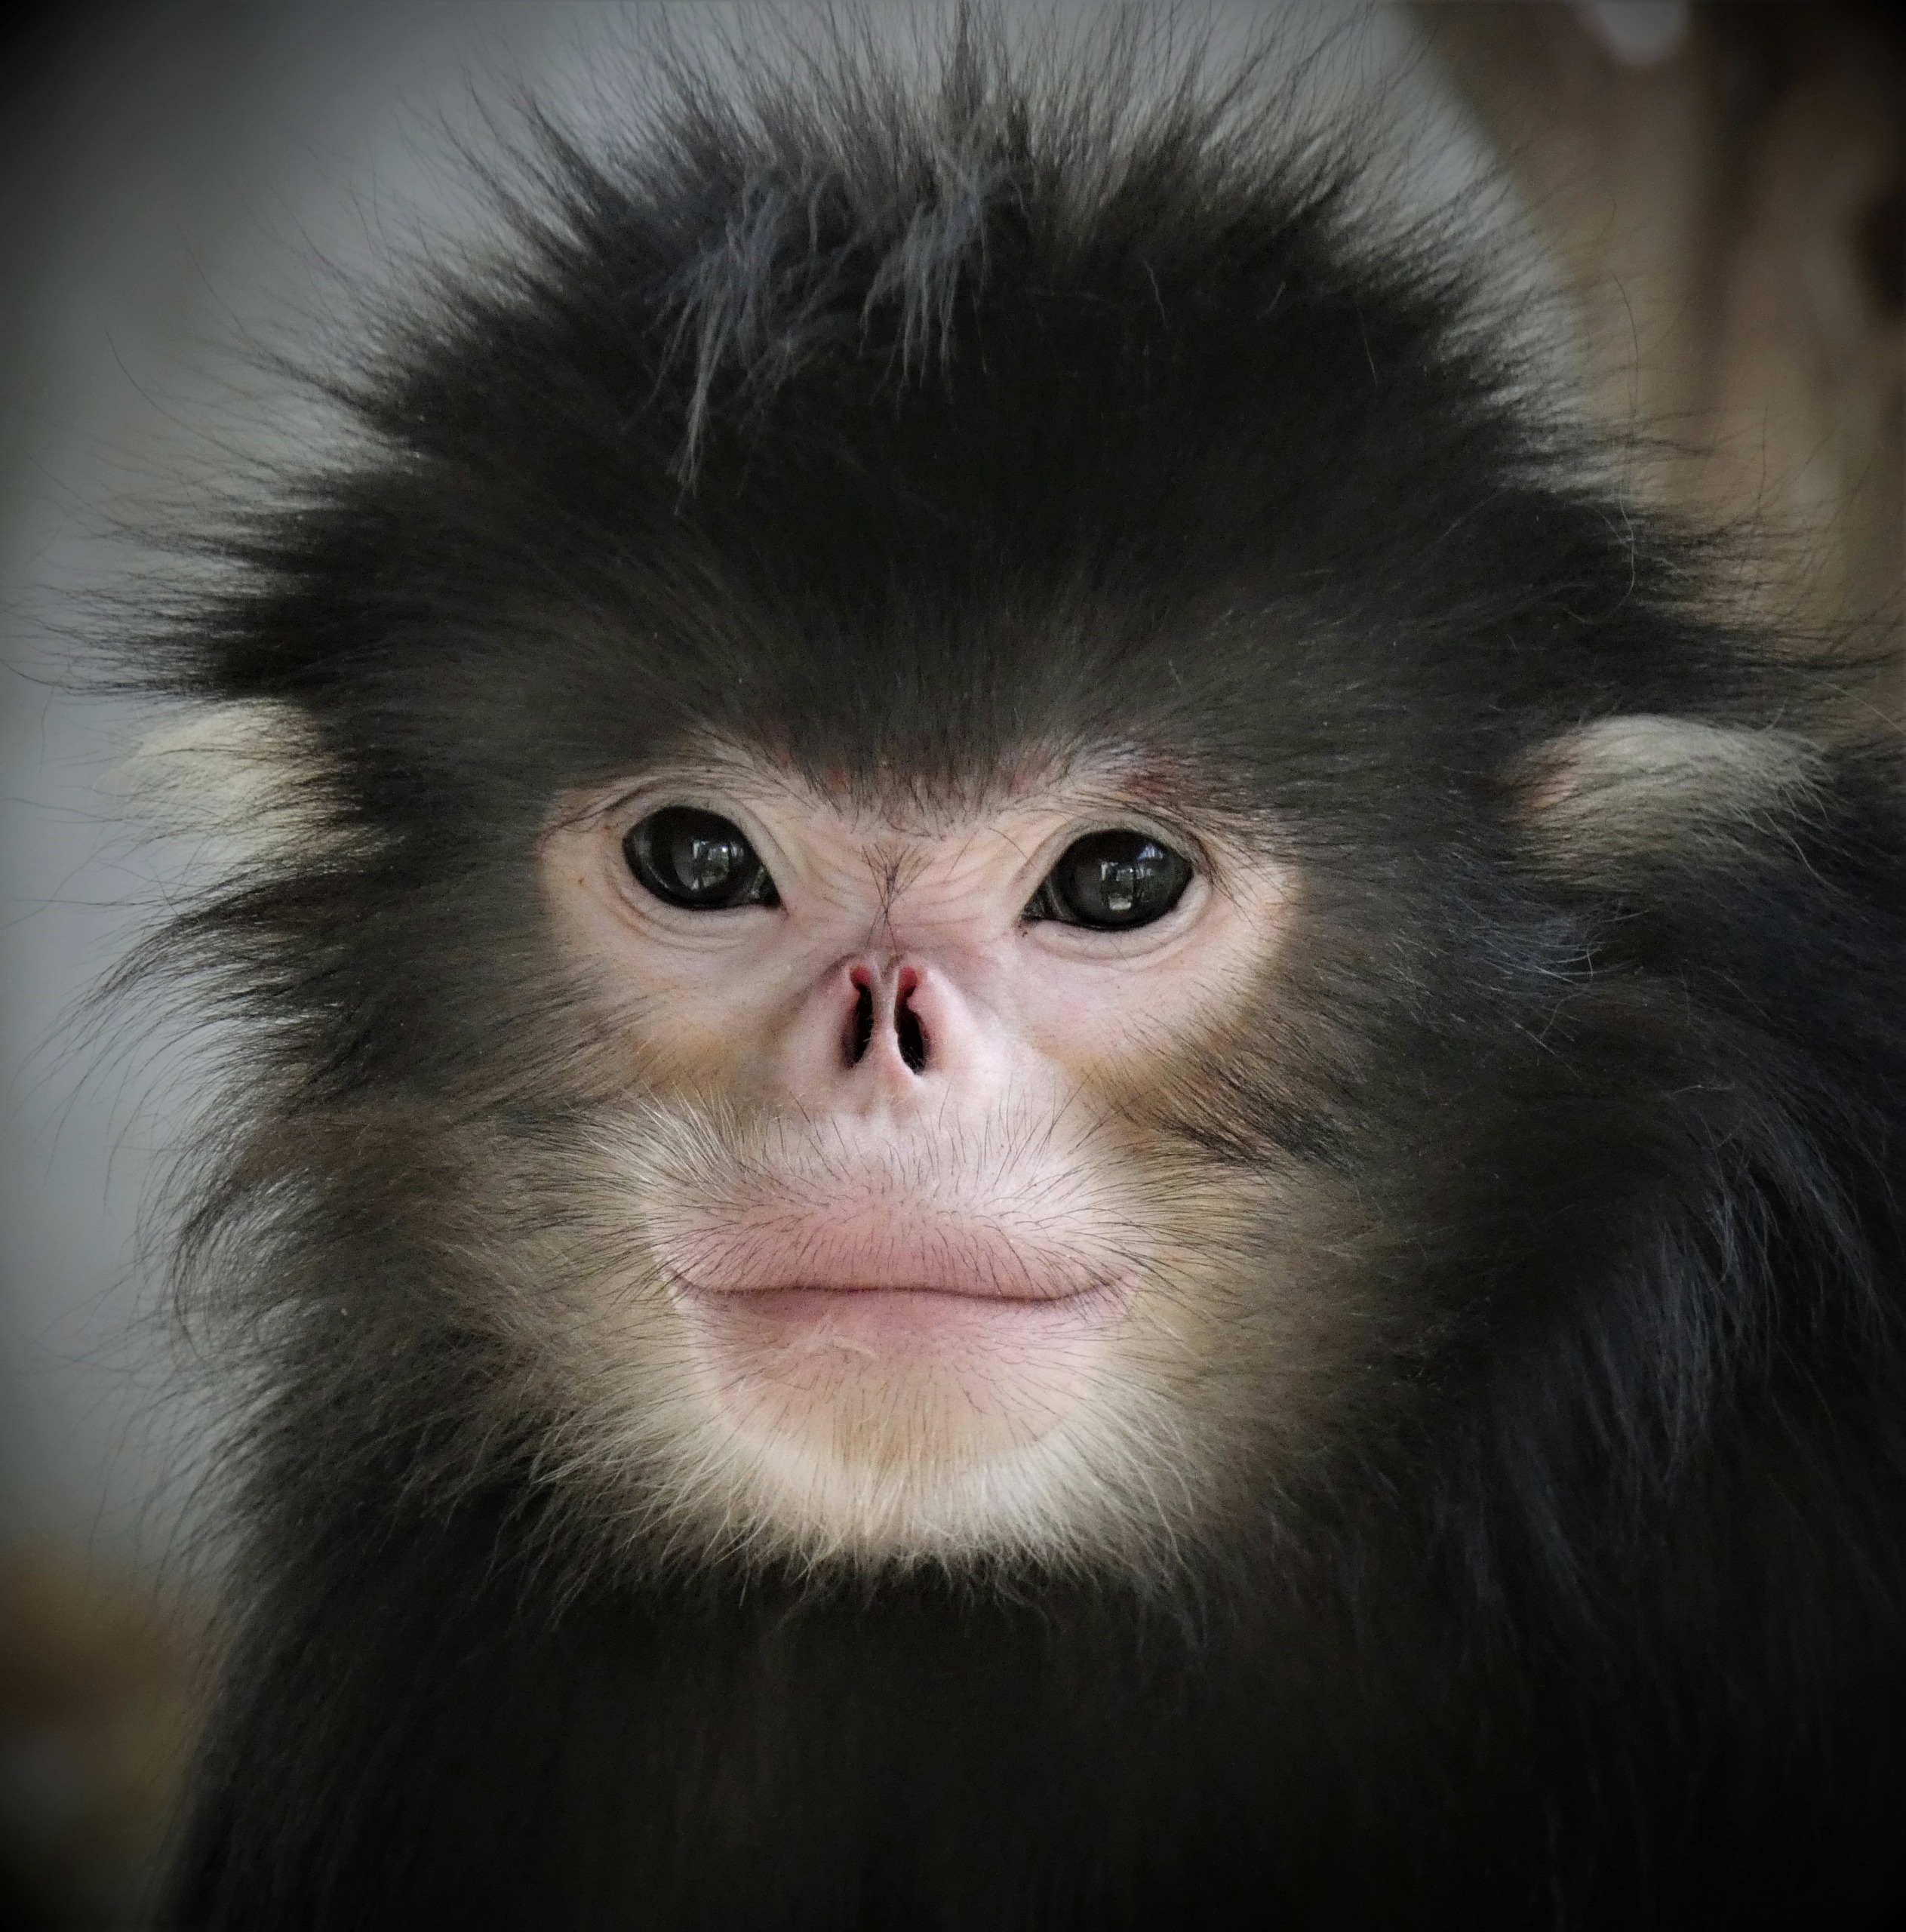 Saving the Yunnan Golden Monkey